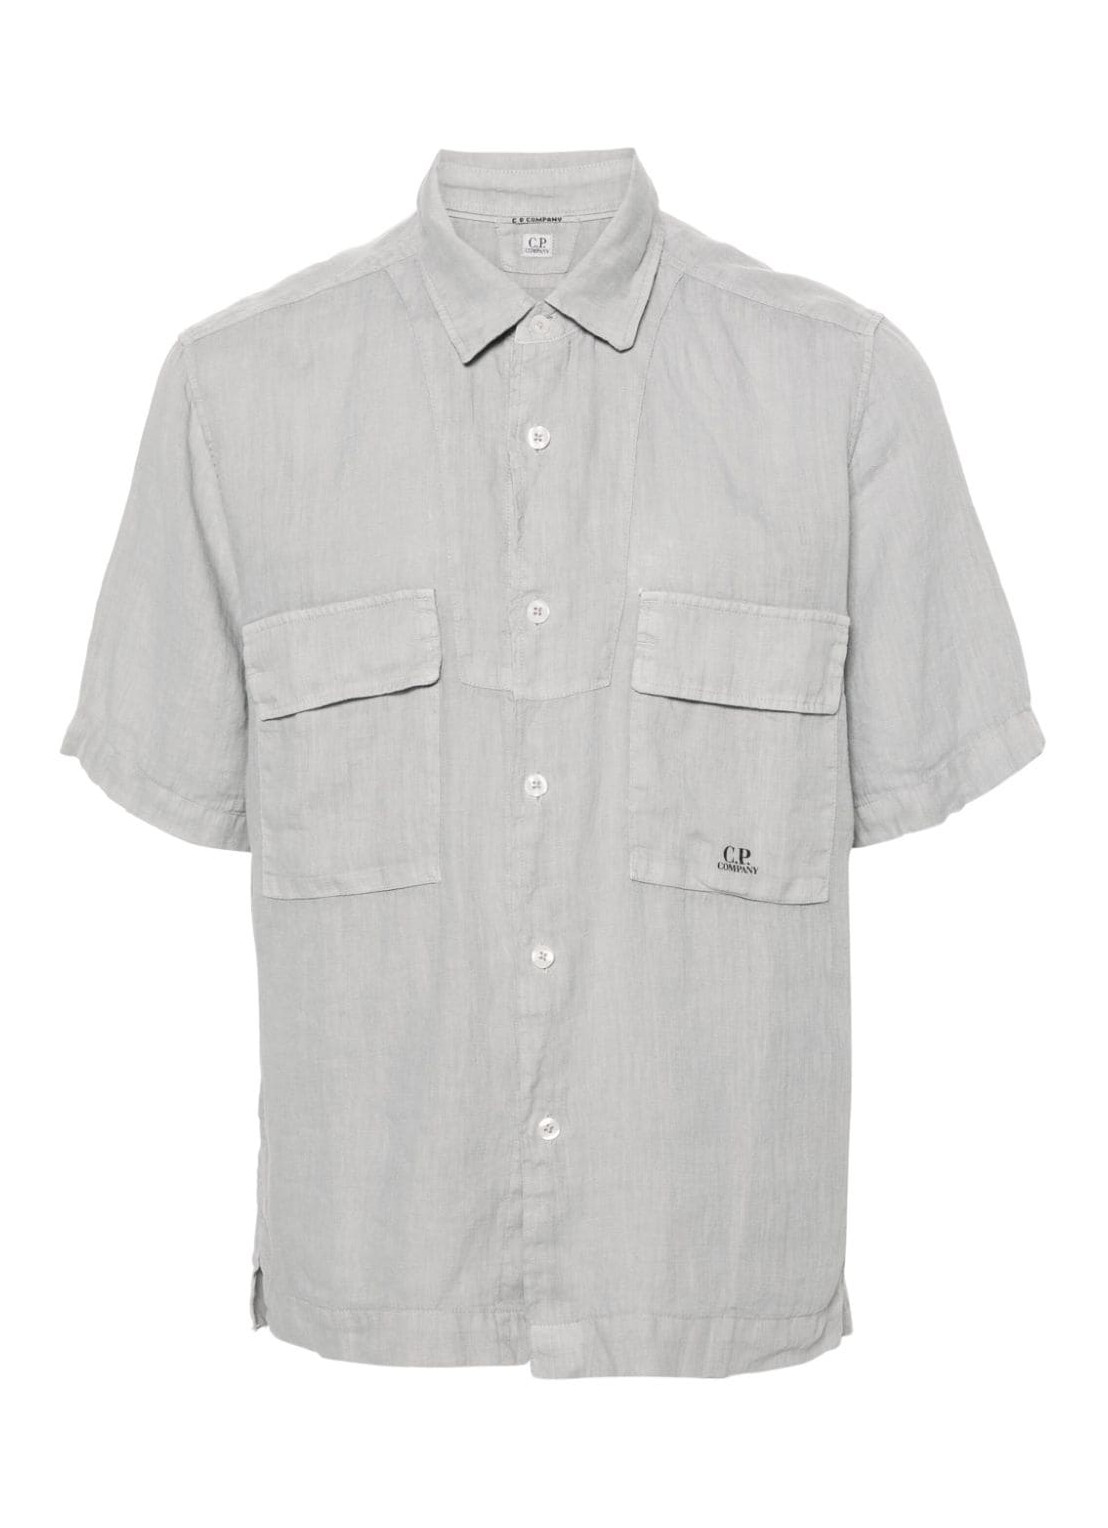 Camiseria c.p.company shirt manlinen short sleeved shirt - 16cmsh210a005415g 913 talla gris
 